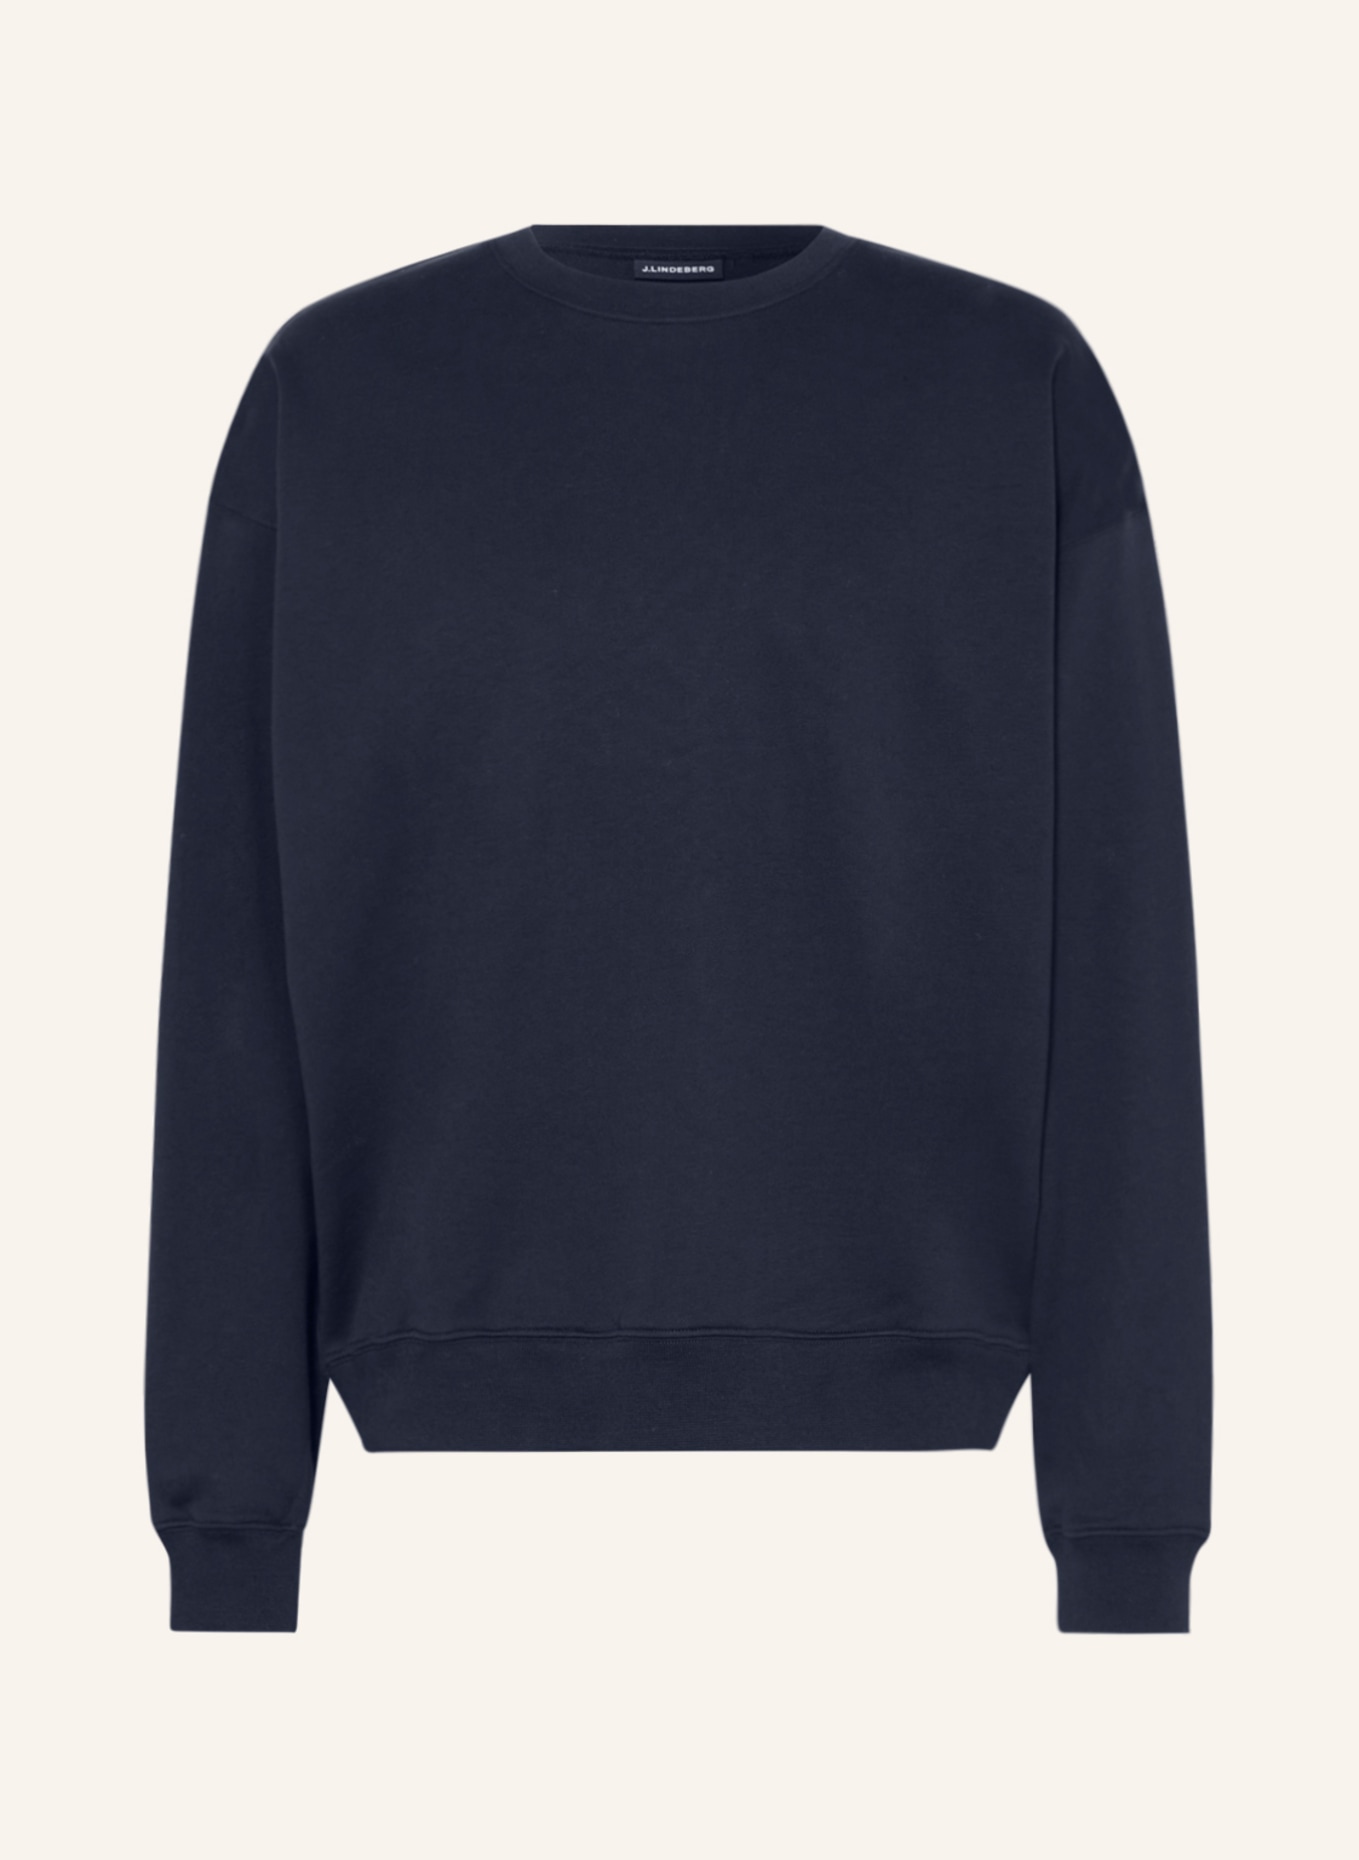 J.LINDEBERG Oversized-Sweatshirt, Farbe: DUNKELBLAU (Bild 1)